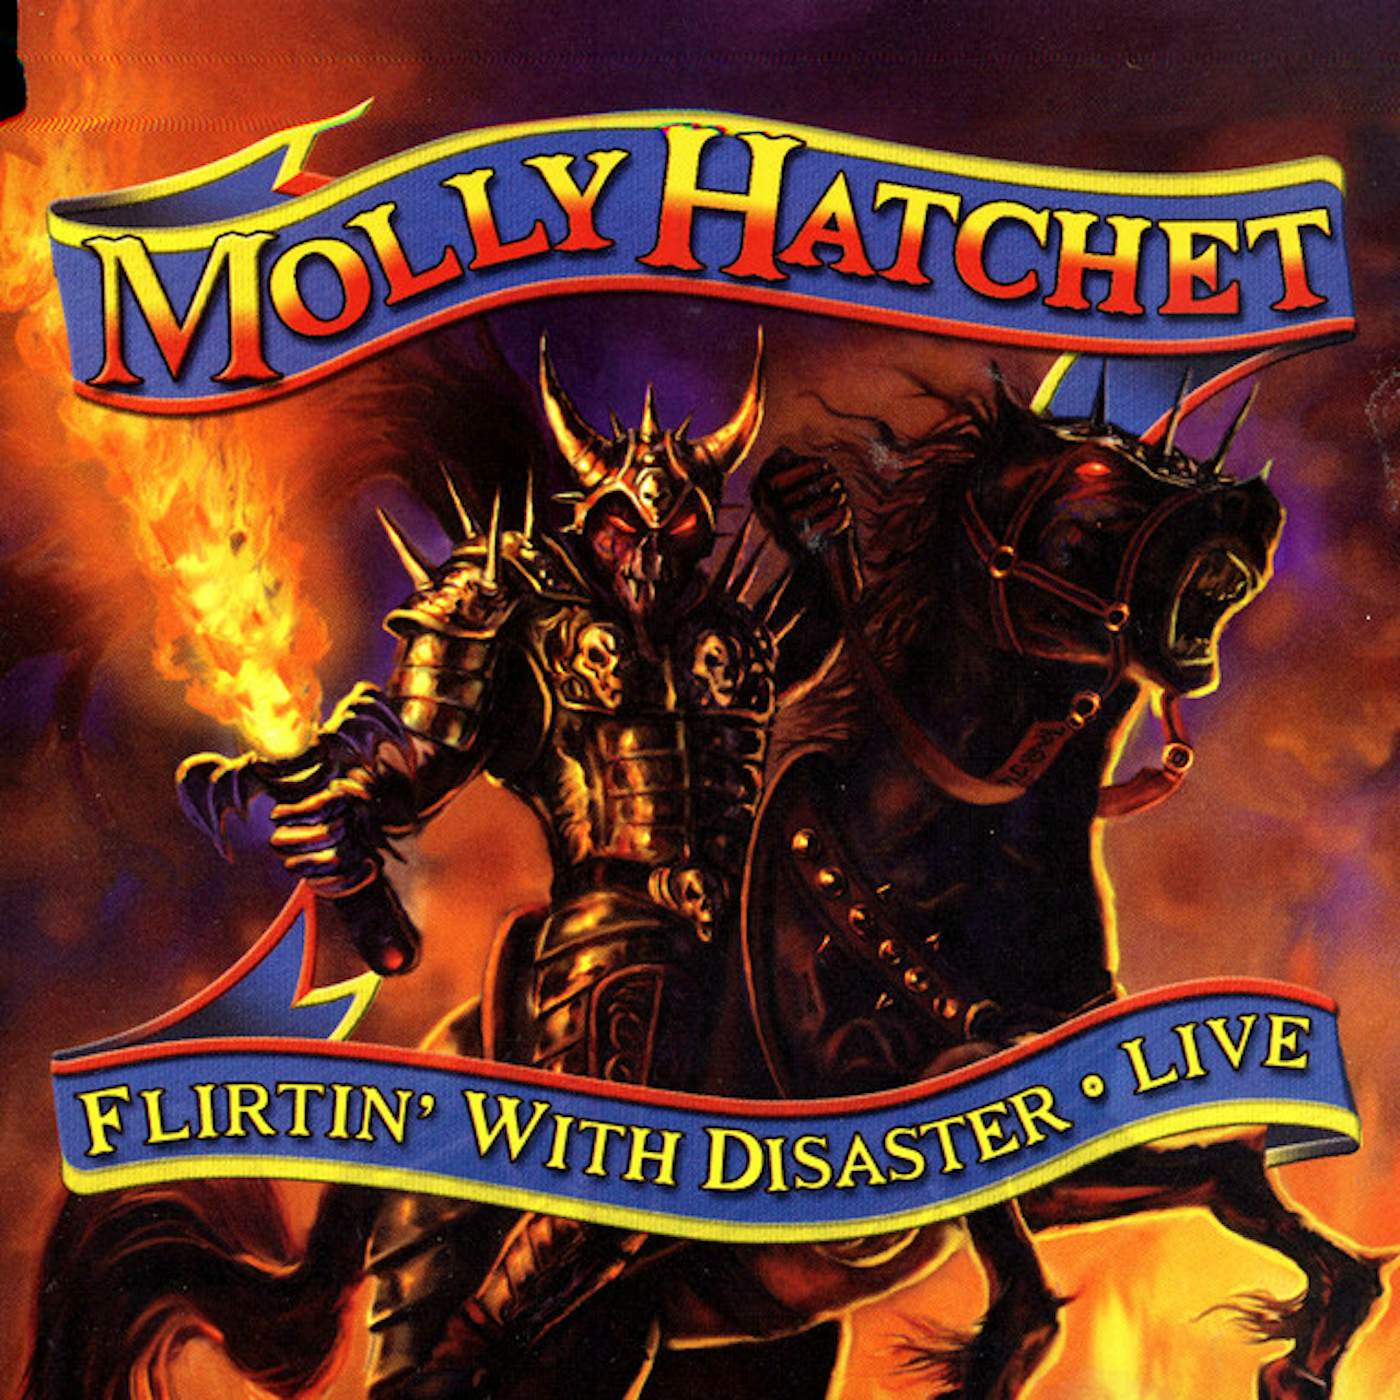 Molly Hatchet Flirtin' With Disaster - Live CD